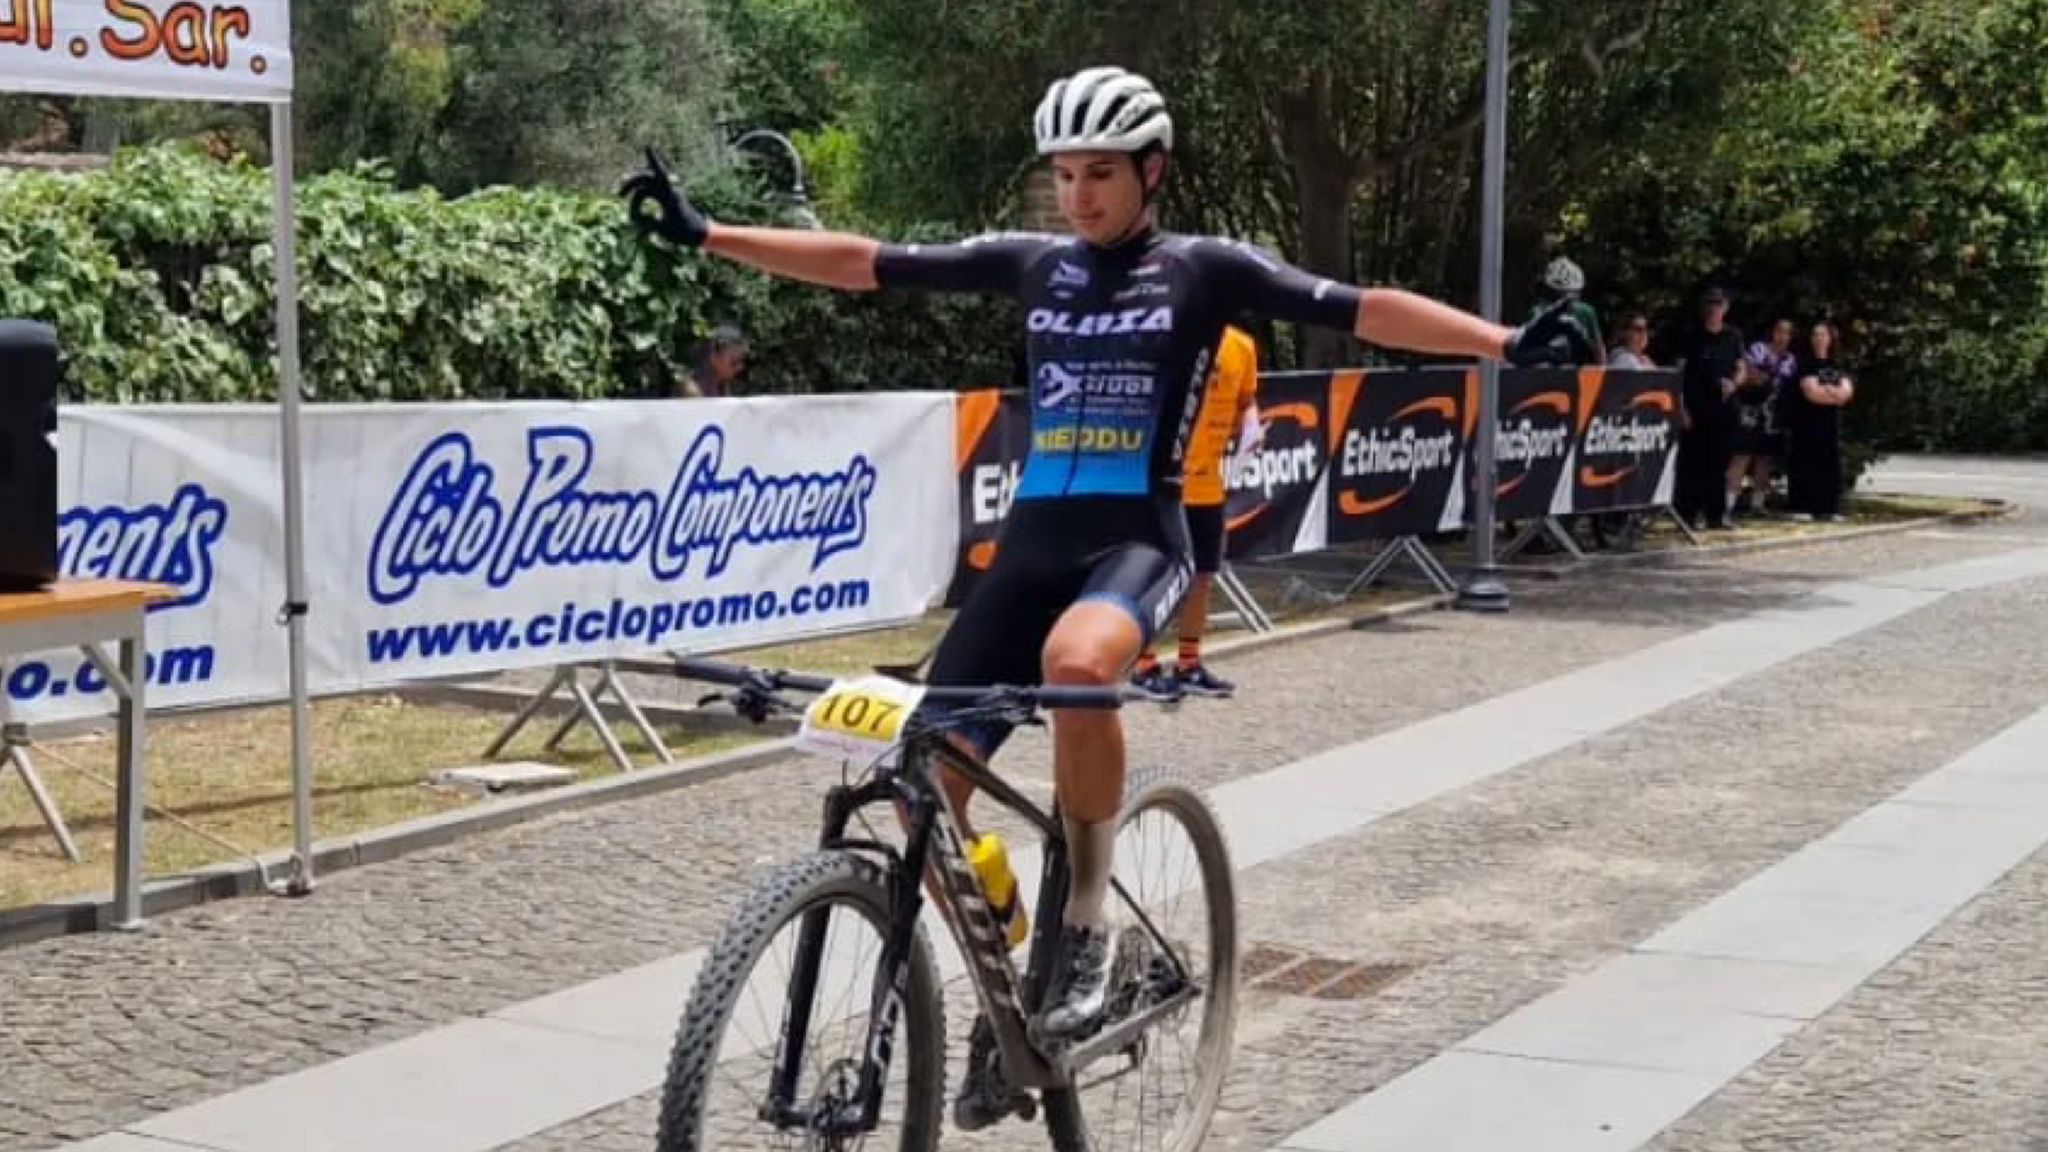 Olbia Cycling: l'atleta olbiese Michael Giua vince il Campionato Regionale Cross Country